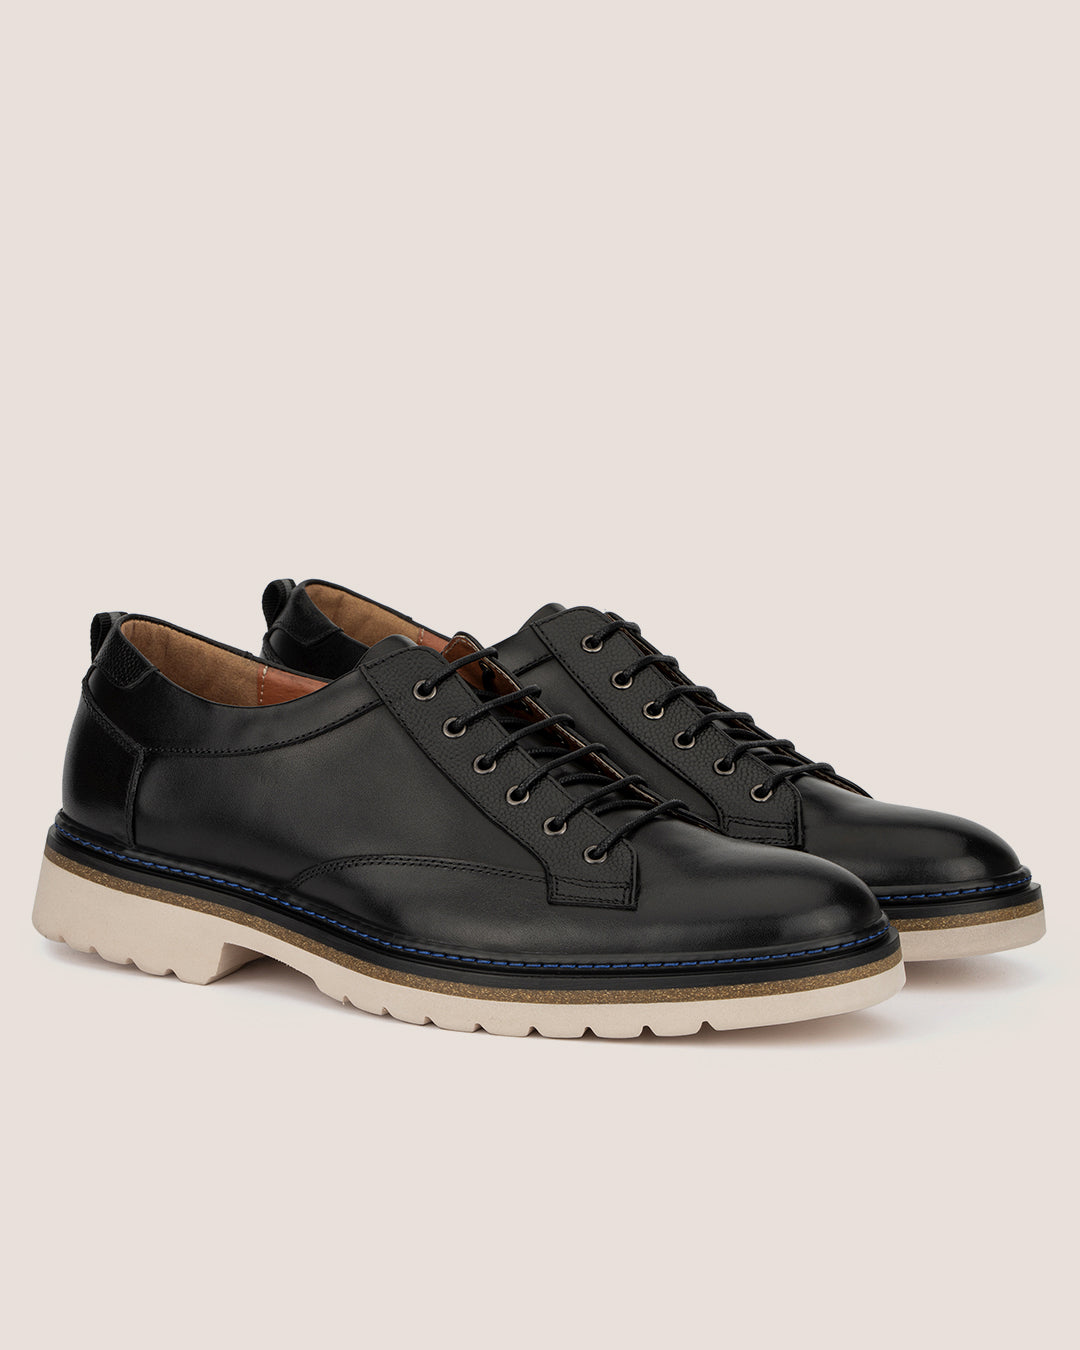  Vintage Foundry Co. Men's Ivan Derby Shoes, Lace Up, Flat  Sole, Round Toe, Rubber Outsole; Size 7.5 Black